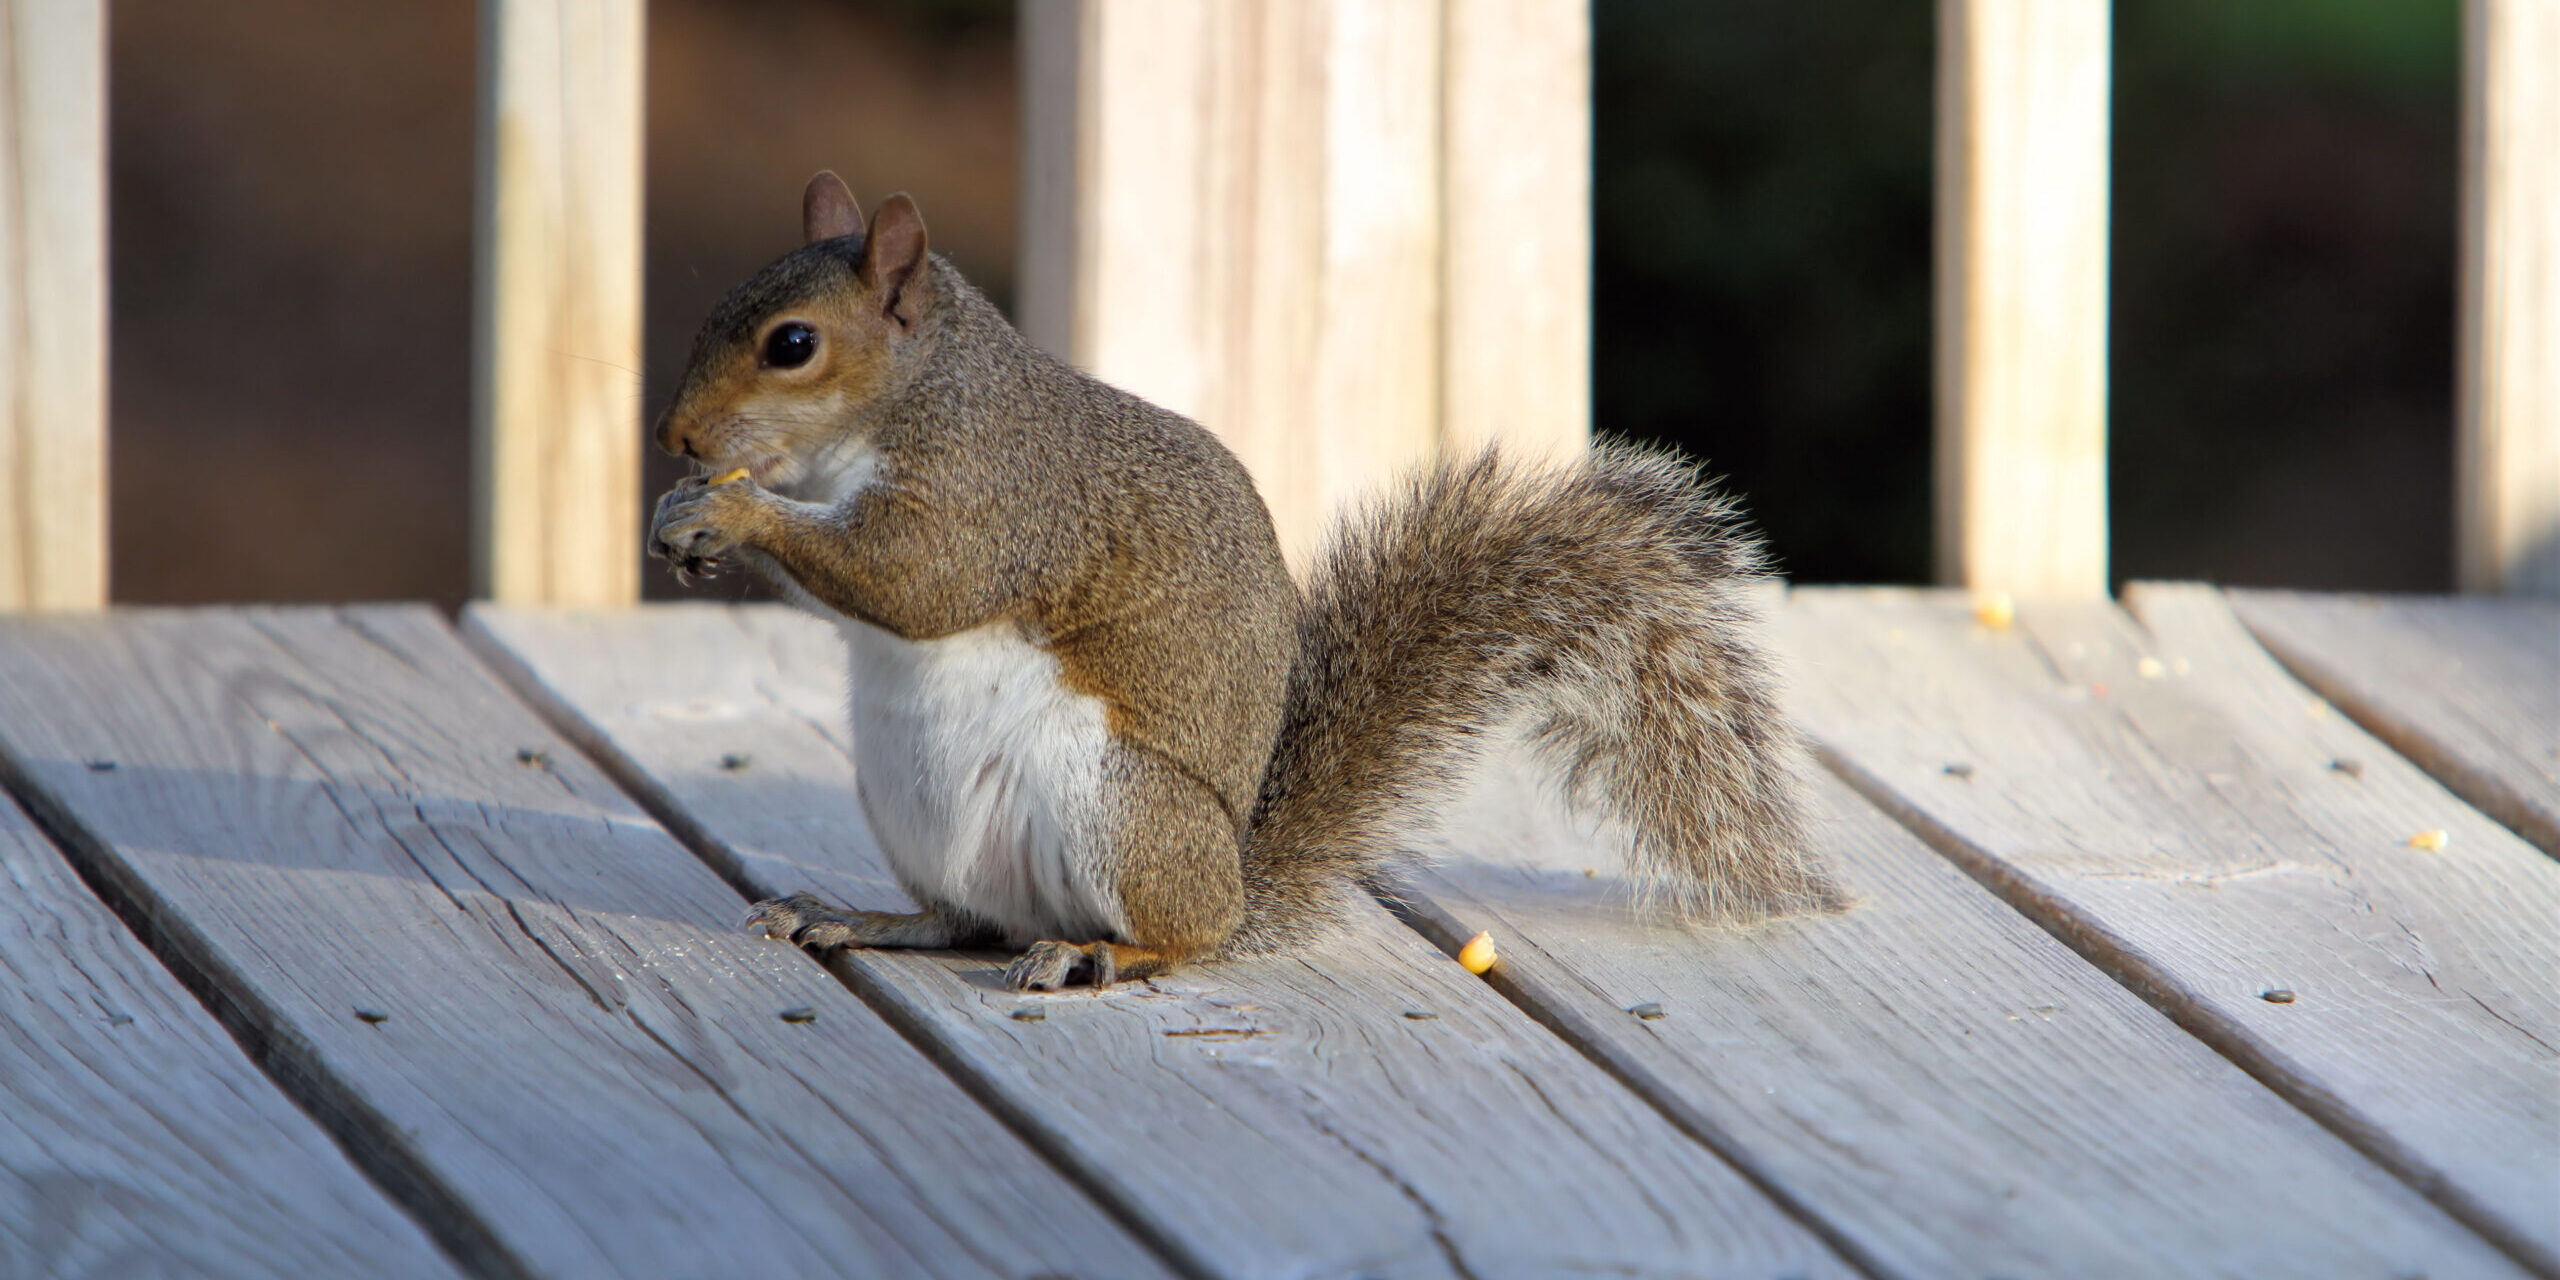 What Do Squirrels Eat? - Varmint Gone